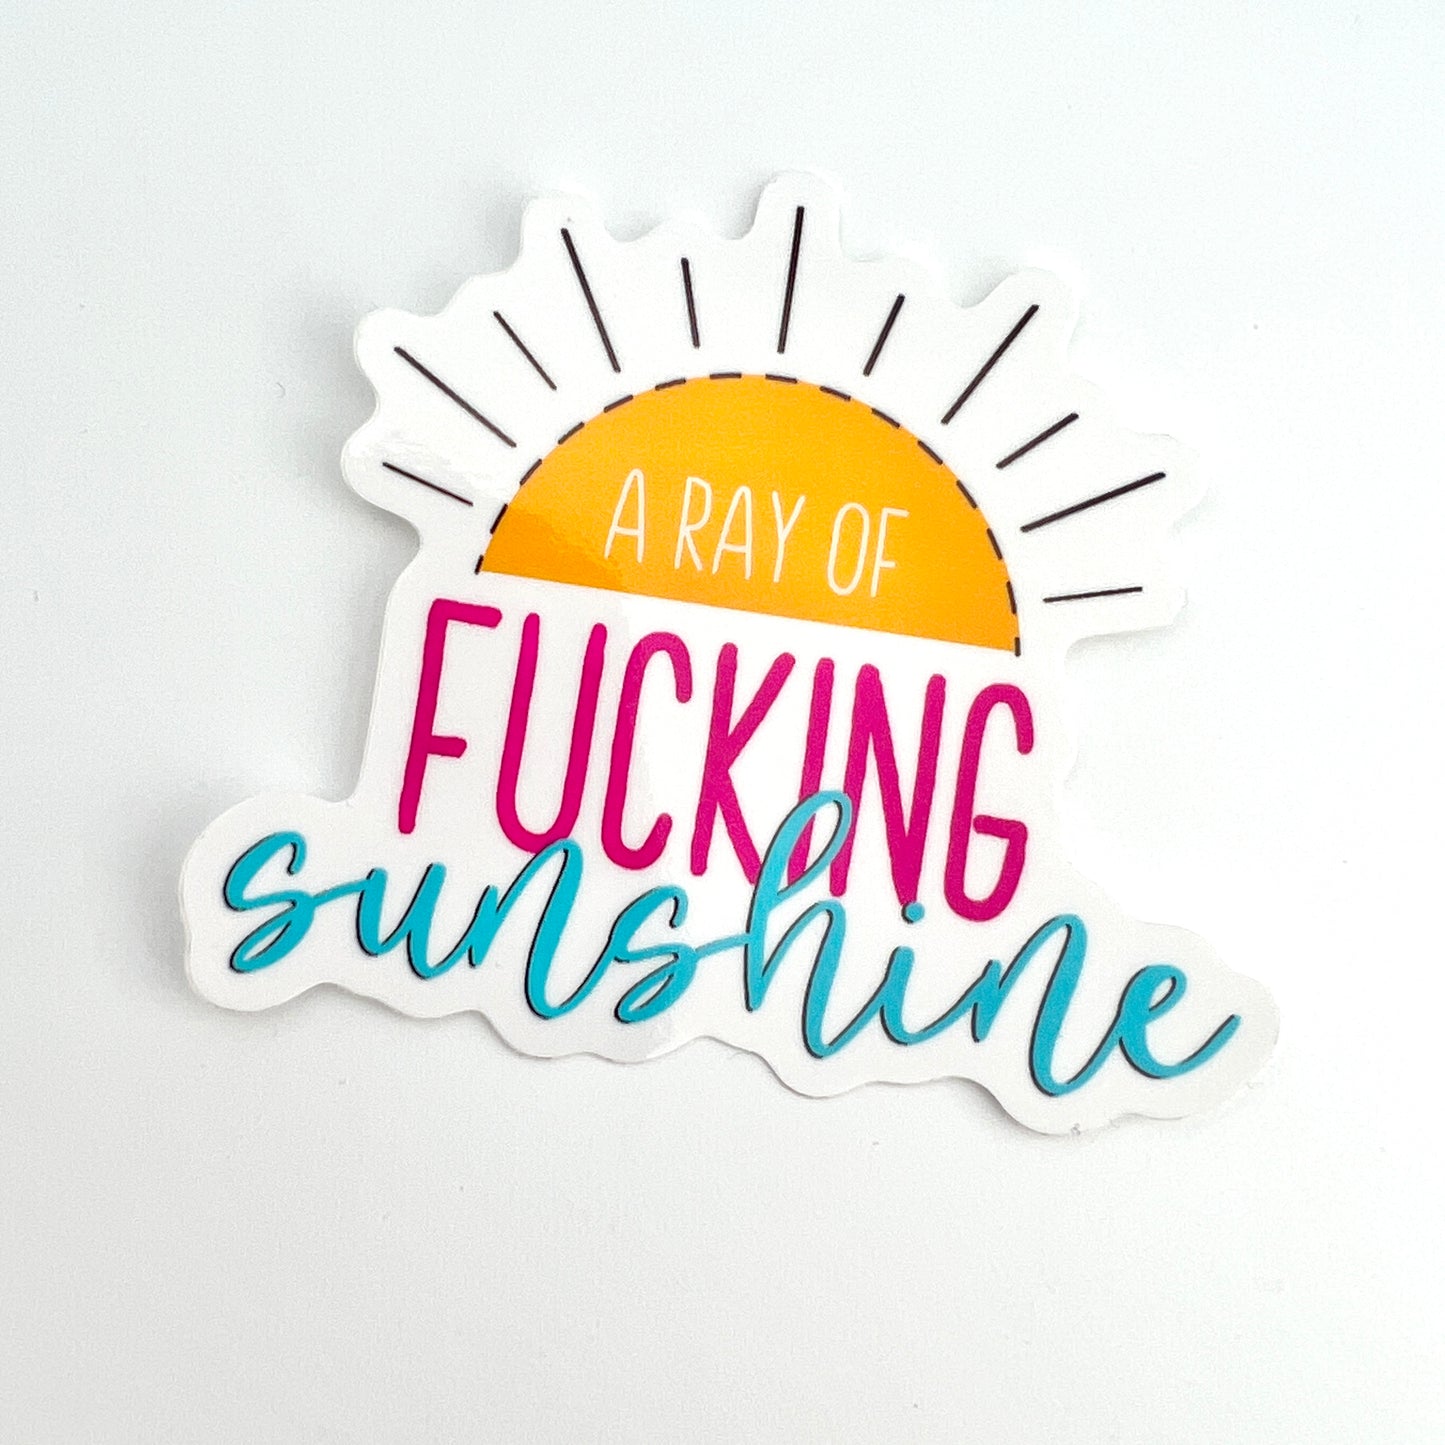 Ray of Fucking Sunshine vinyl sticker